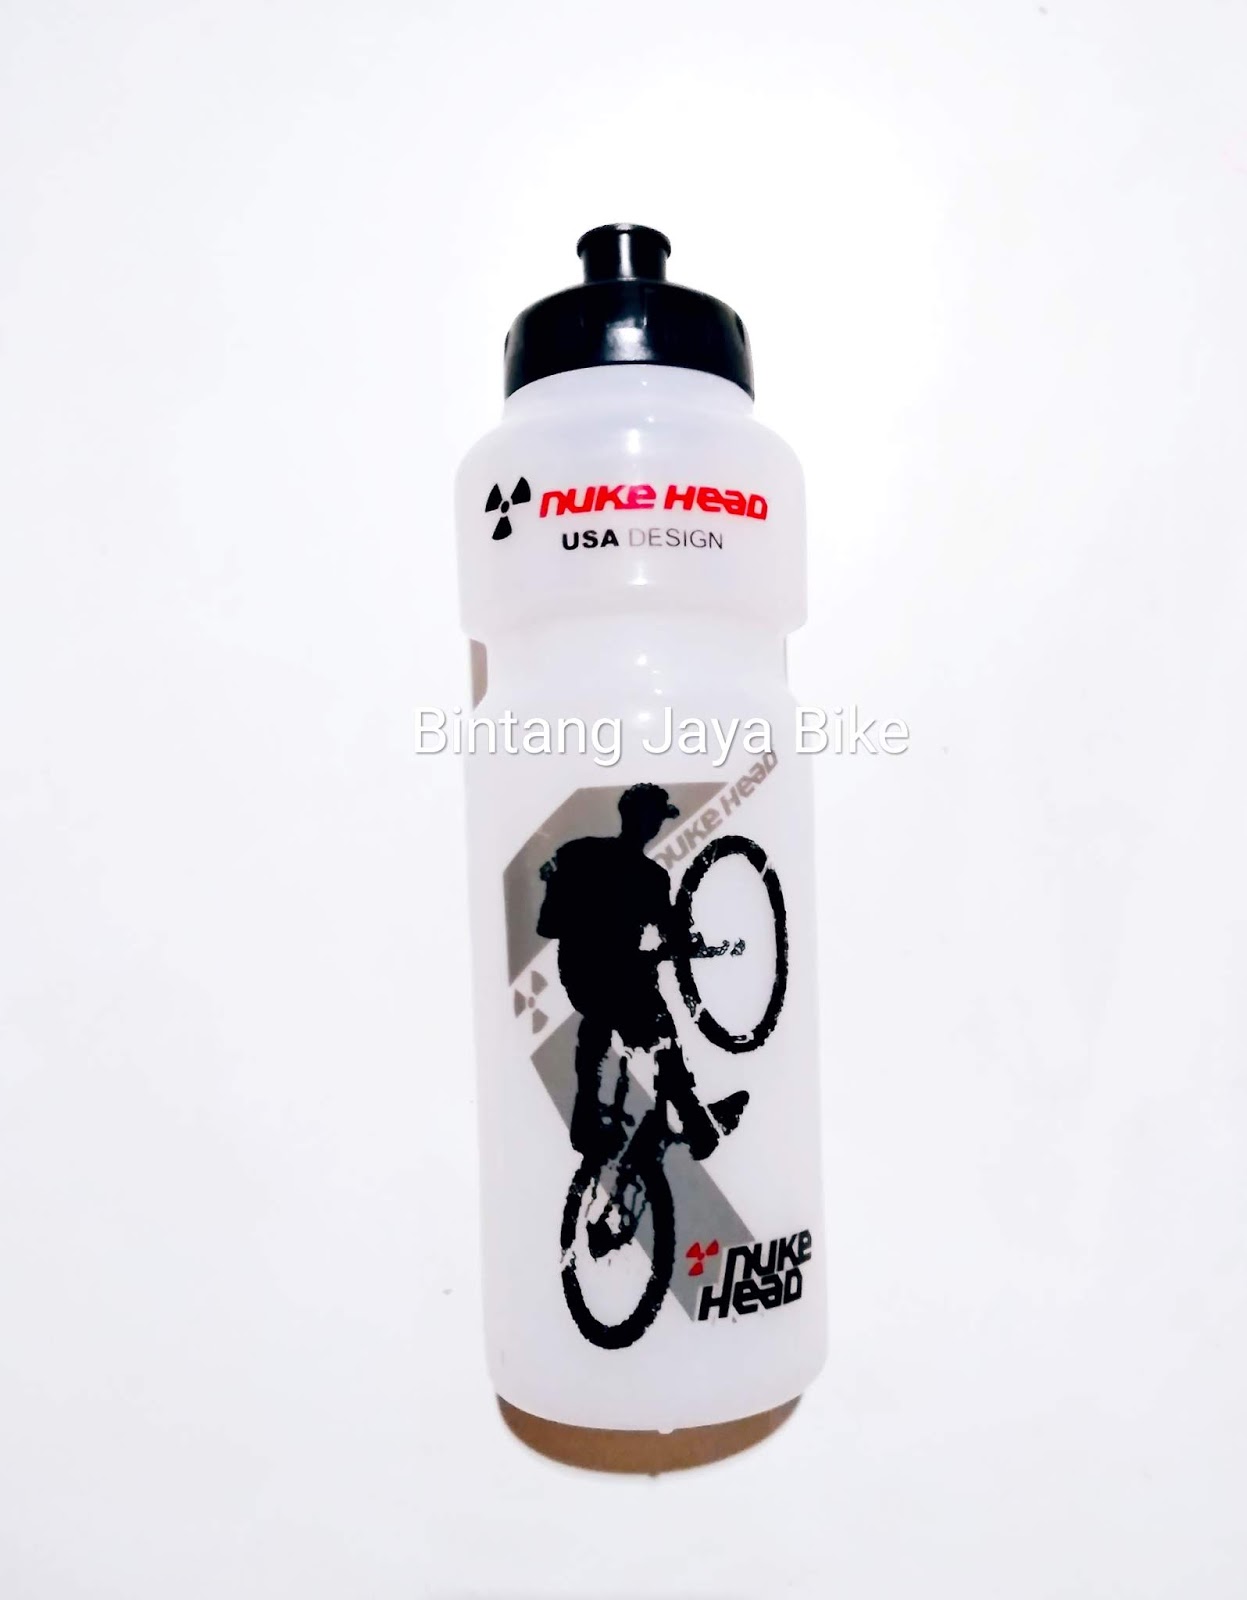 Botol Nukehead Rp 35 000 Bintang Jaya Bike